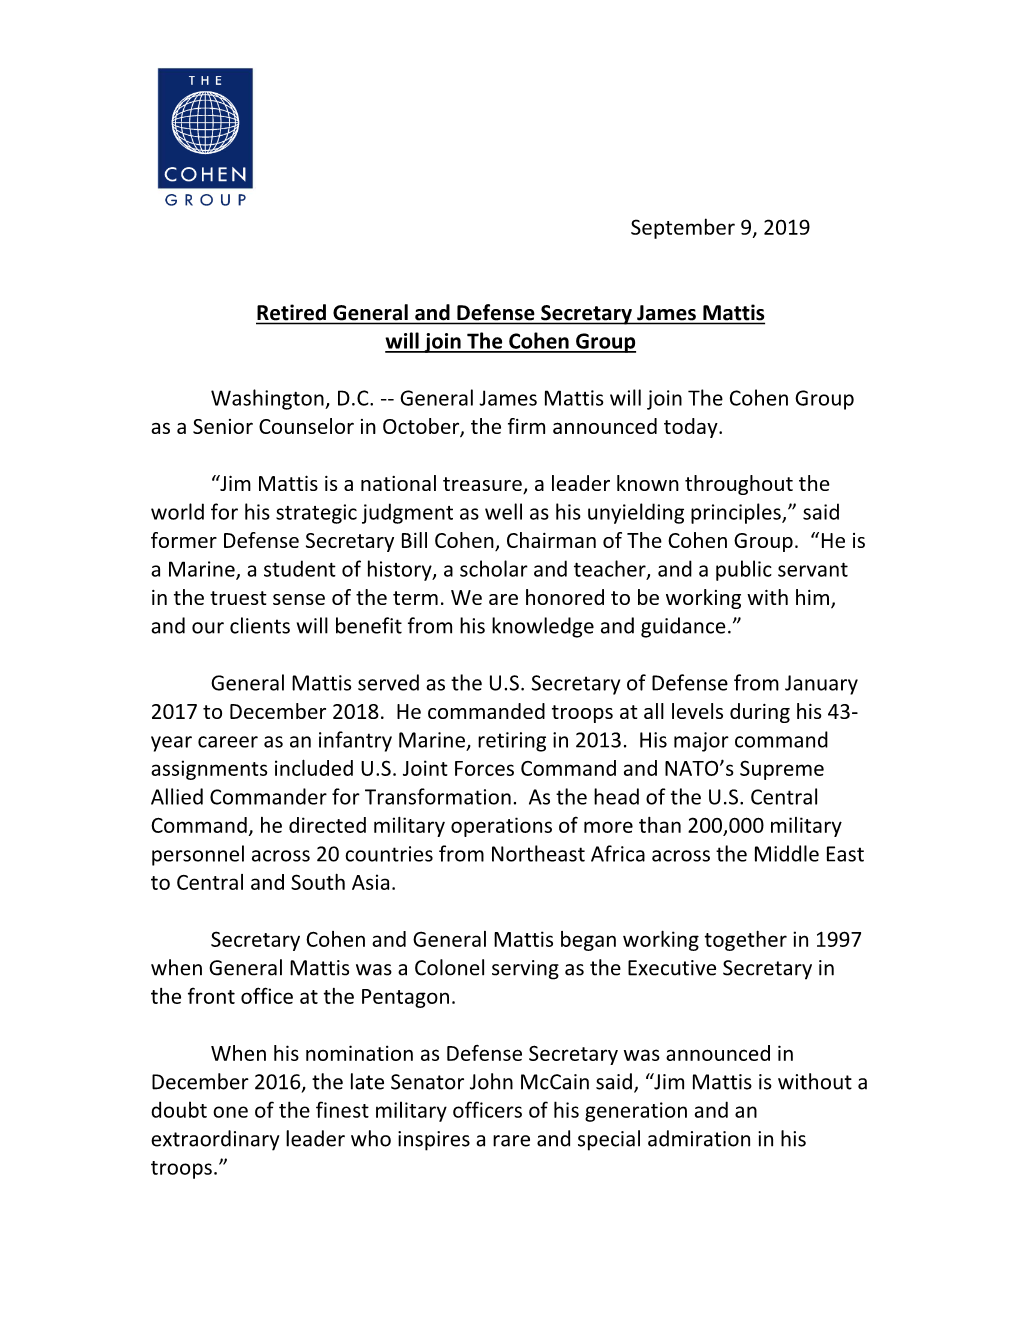 September 9, 2019 Retired General and Defense Secretary James Mattis Will Join the Cohen Group Washington, DC